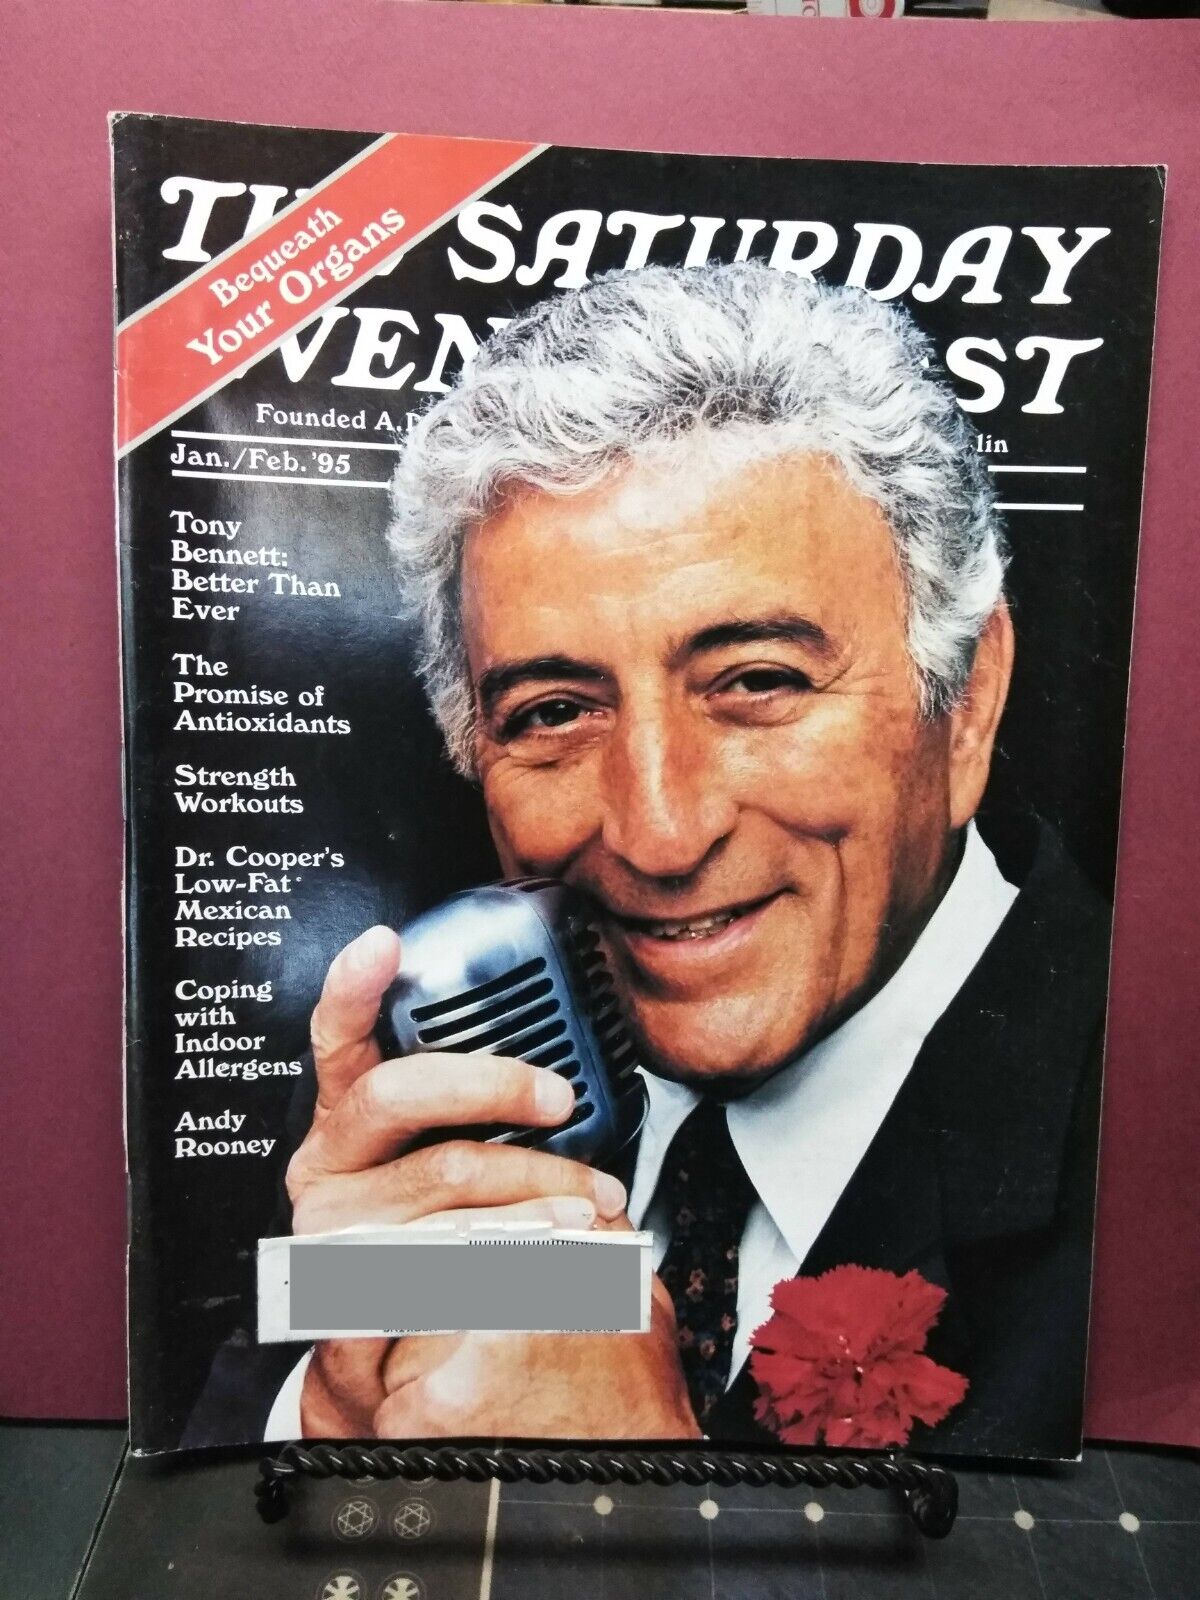 VINTAGE JANUARY/FEB 1995 SATURDAY EVENING POST MAGAZINE - TONY BENNETT COVER